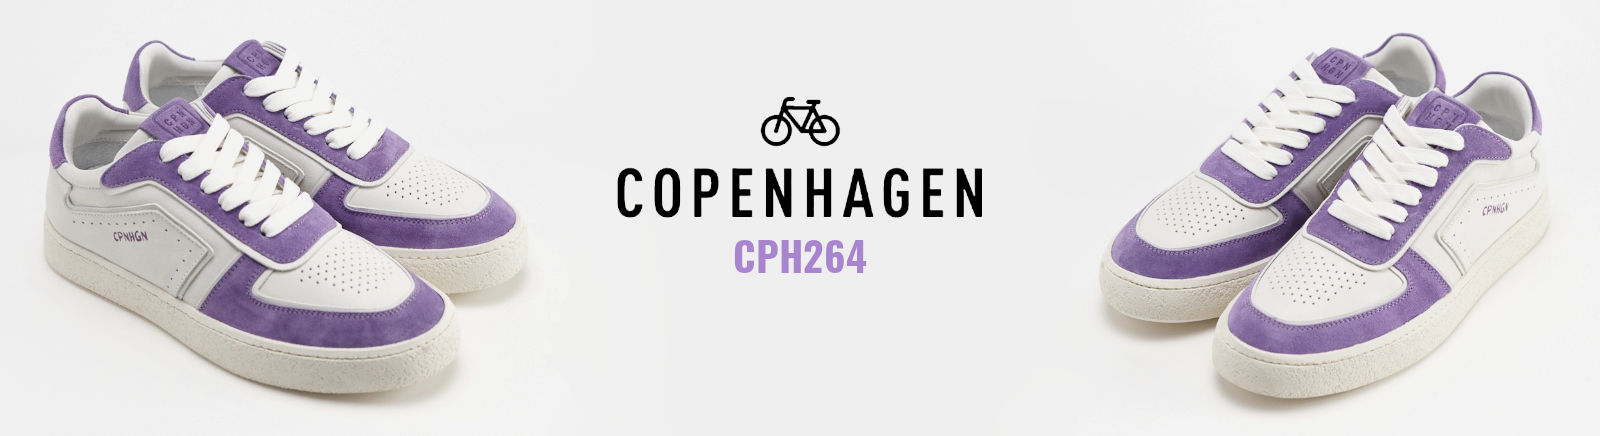 Juppen: Copenhagen Schnürboots für Herren online shoppen